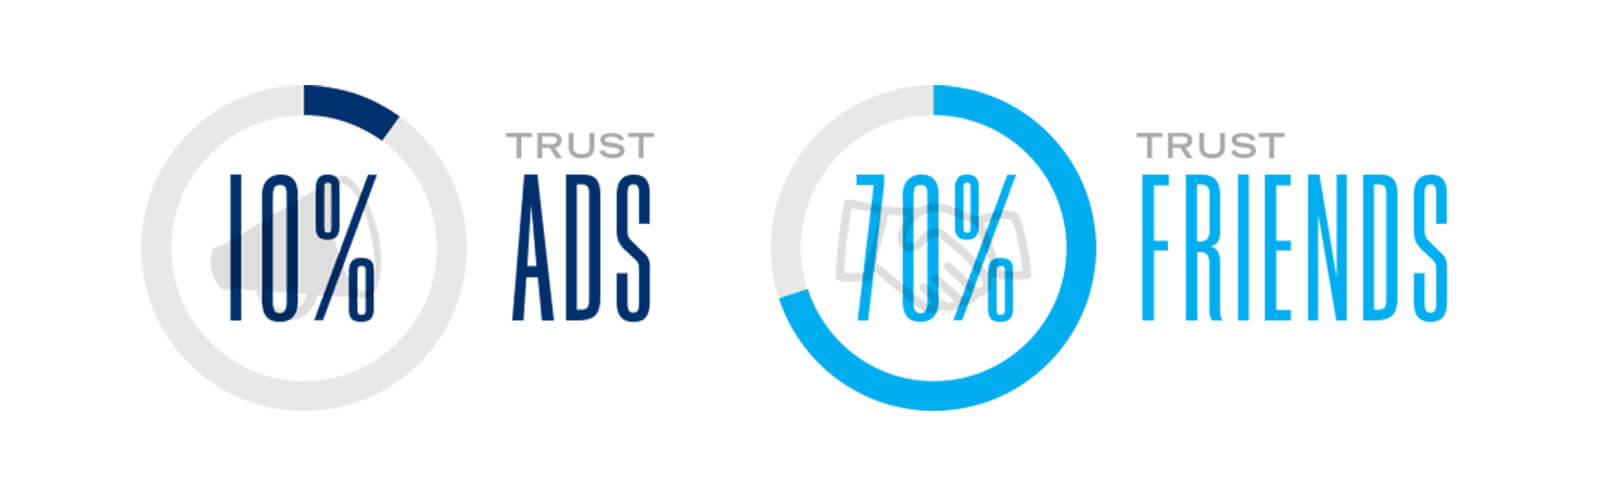 ten percent trust ads and seventy percent trust friends